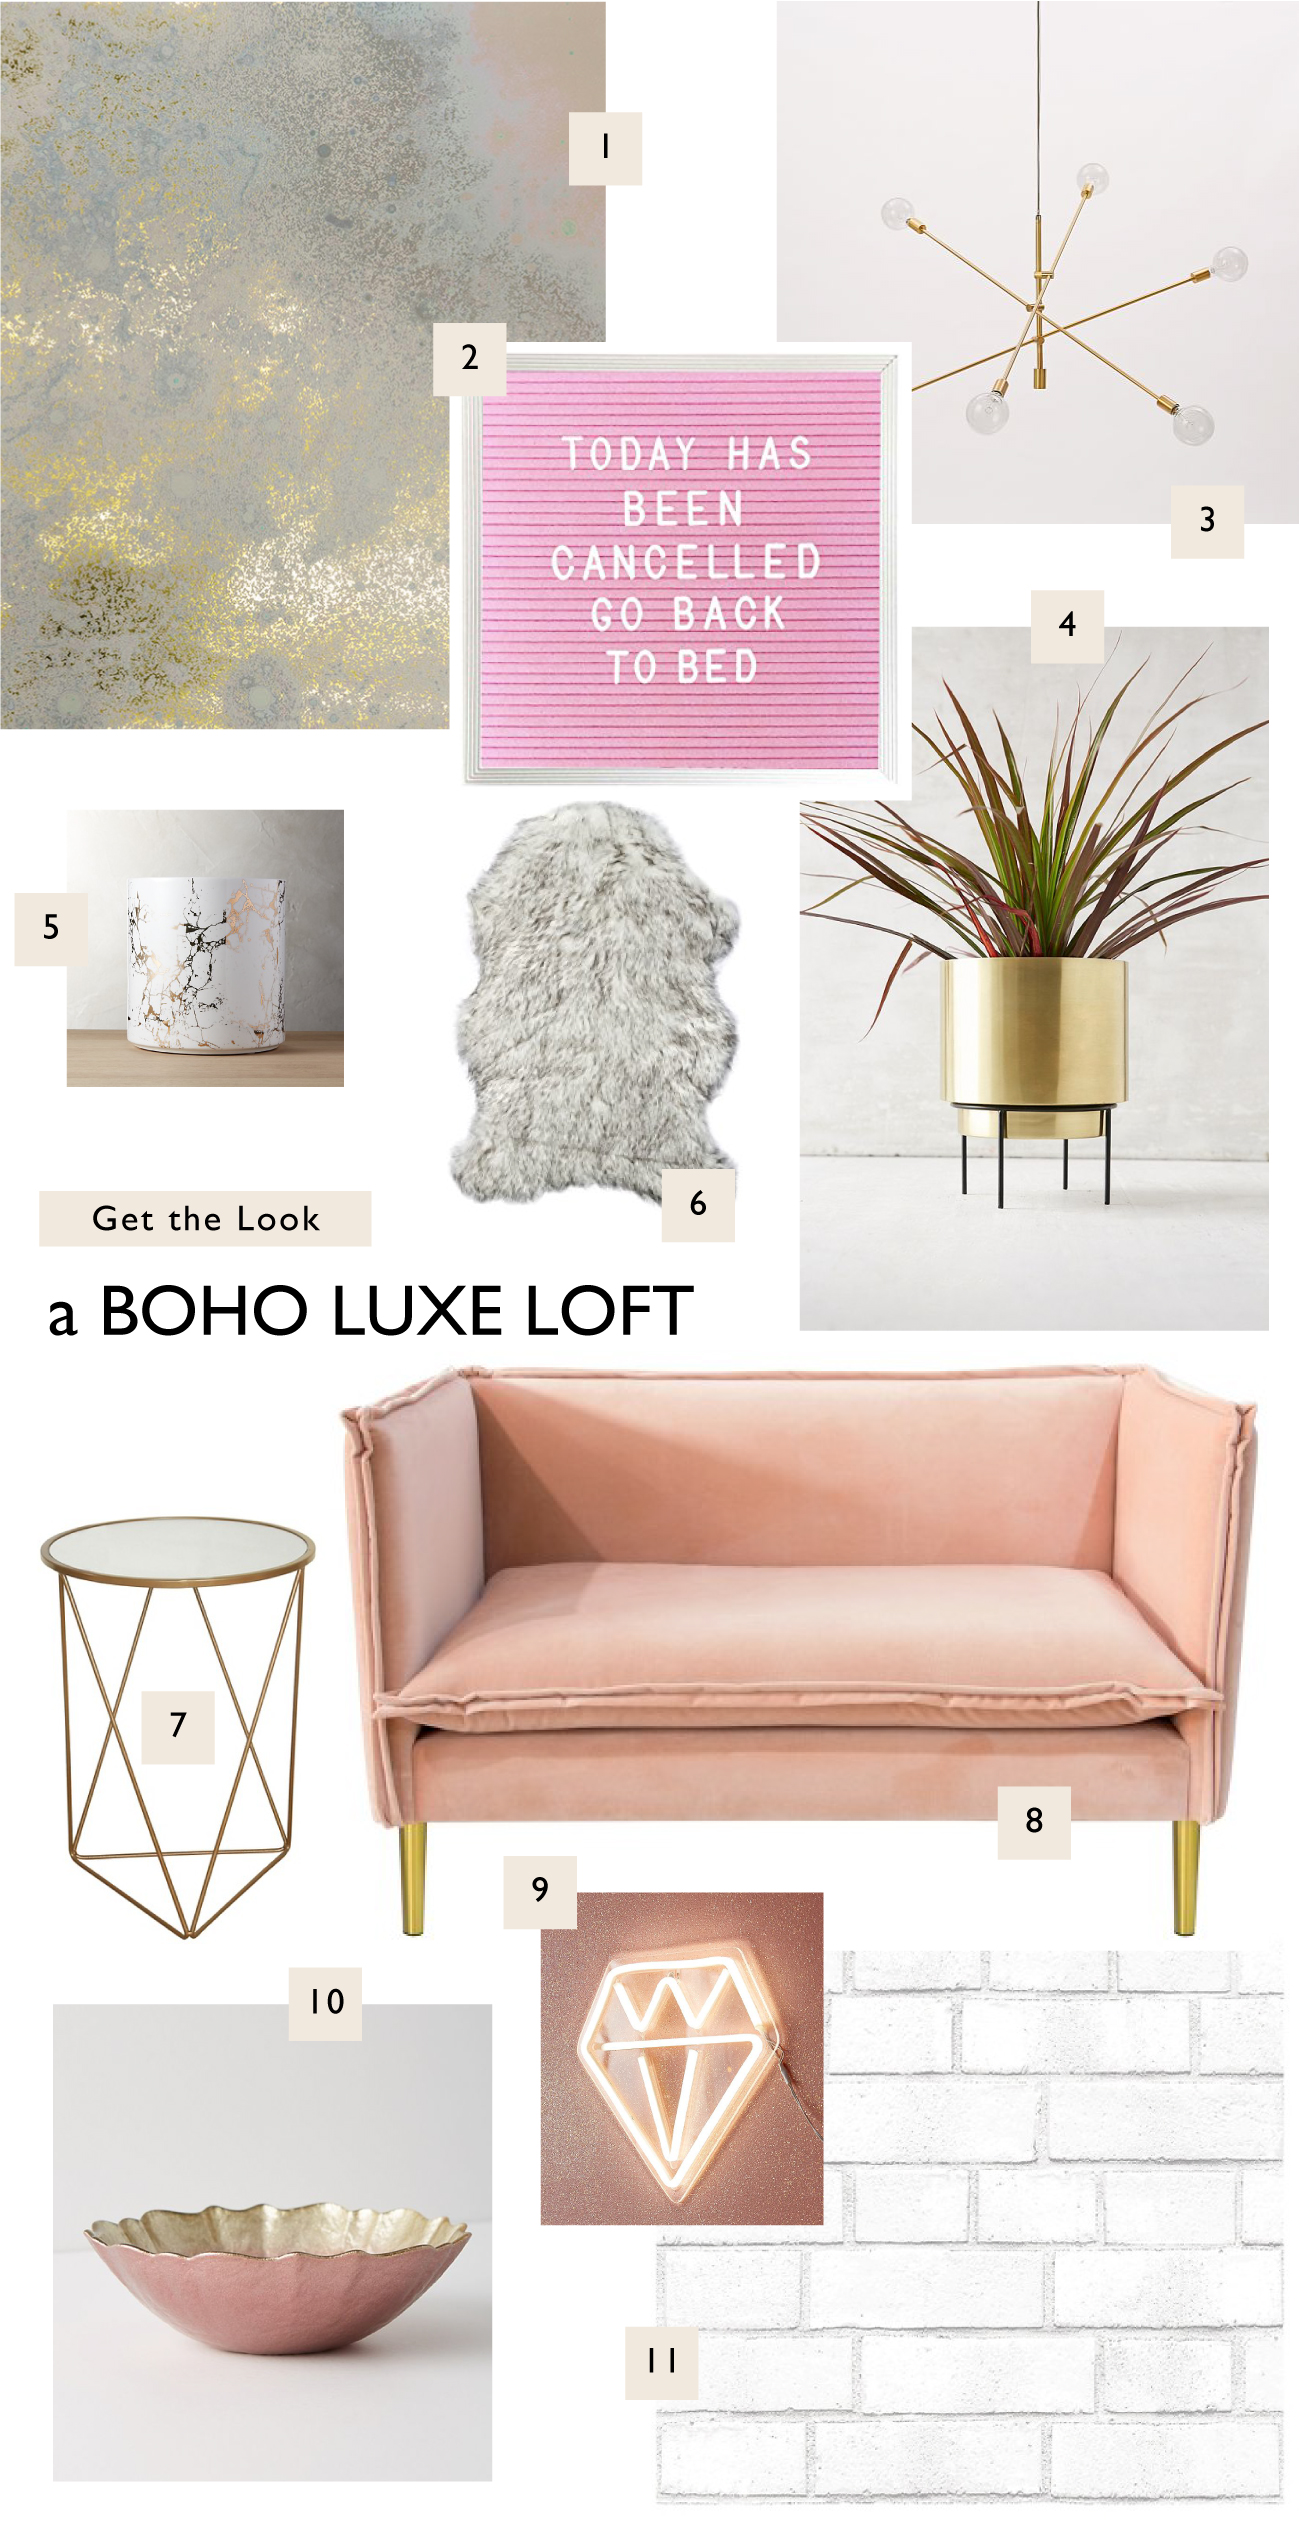 Get the Look: Boho Luxe Loft